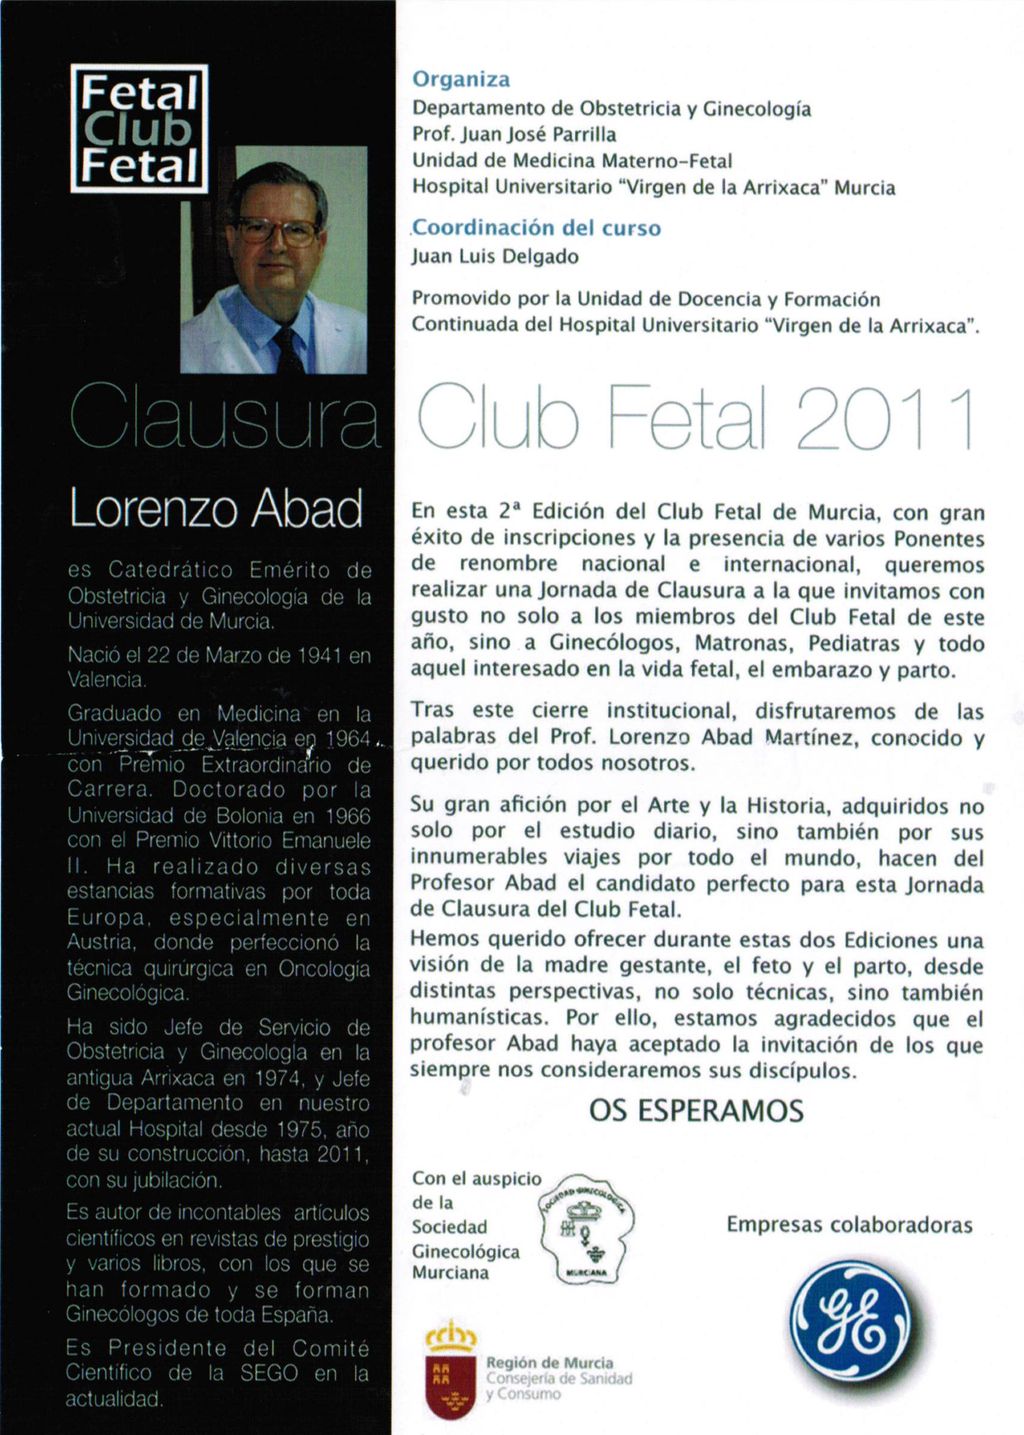 Conferencia club fetal Murcia Profesor Abad, diciembre 2011